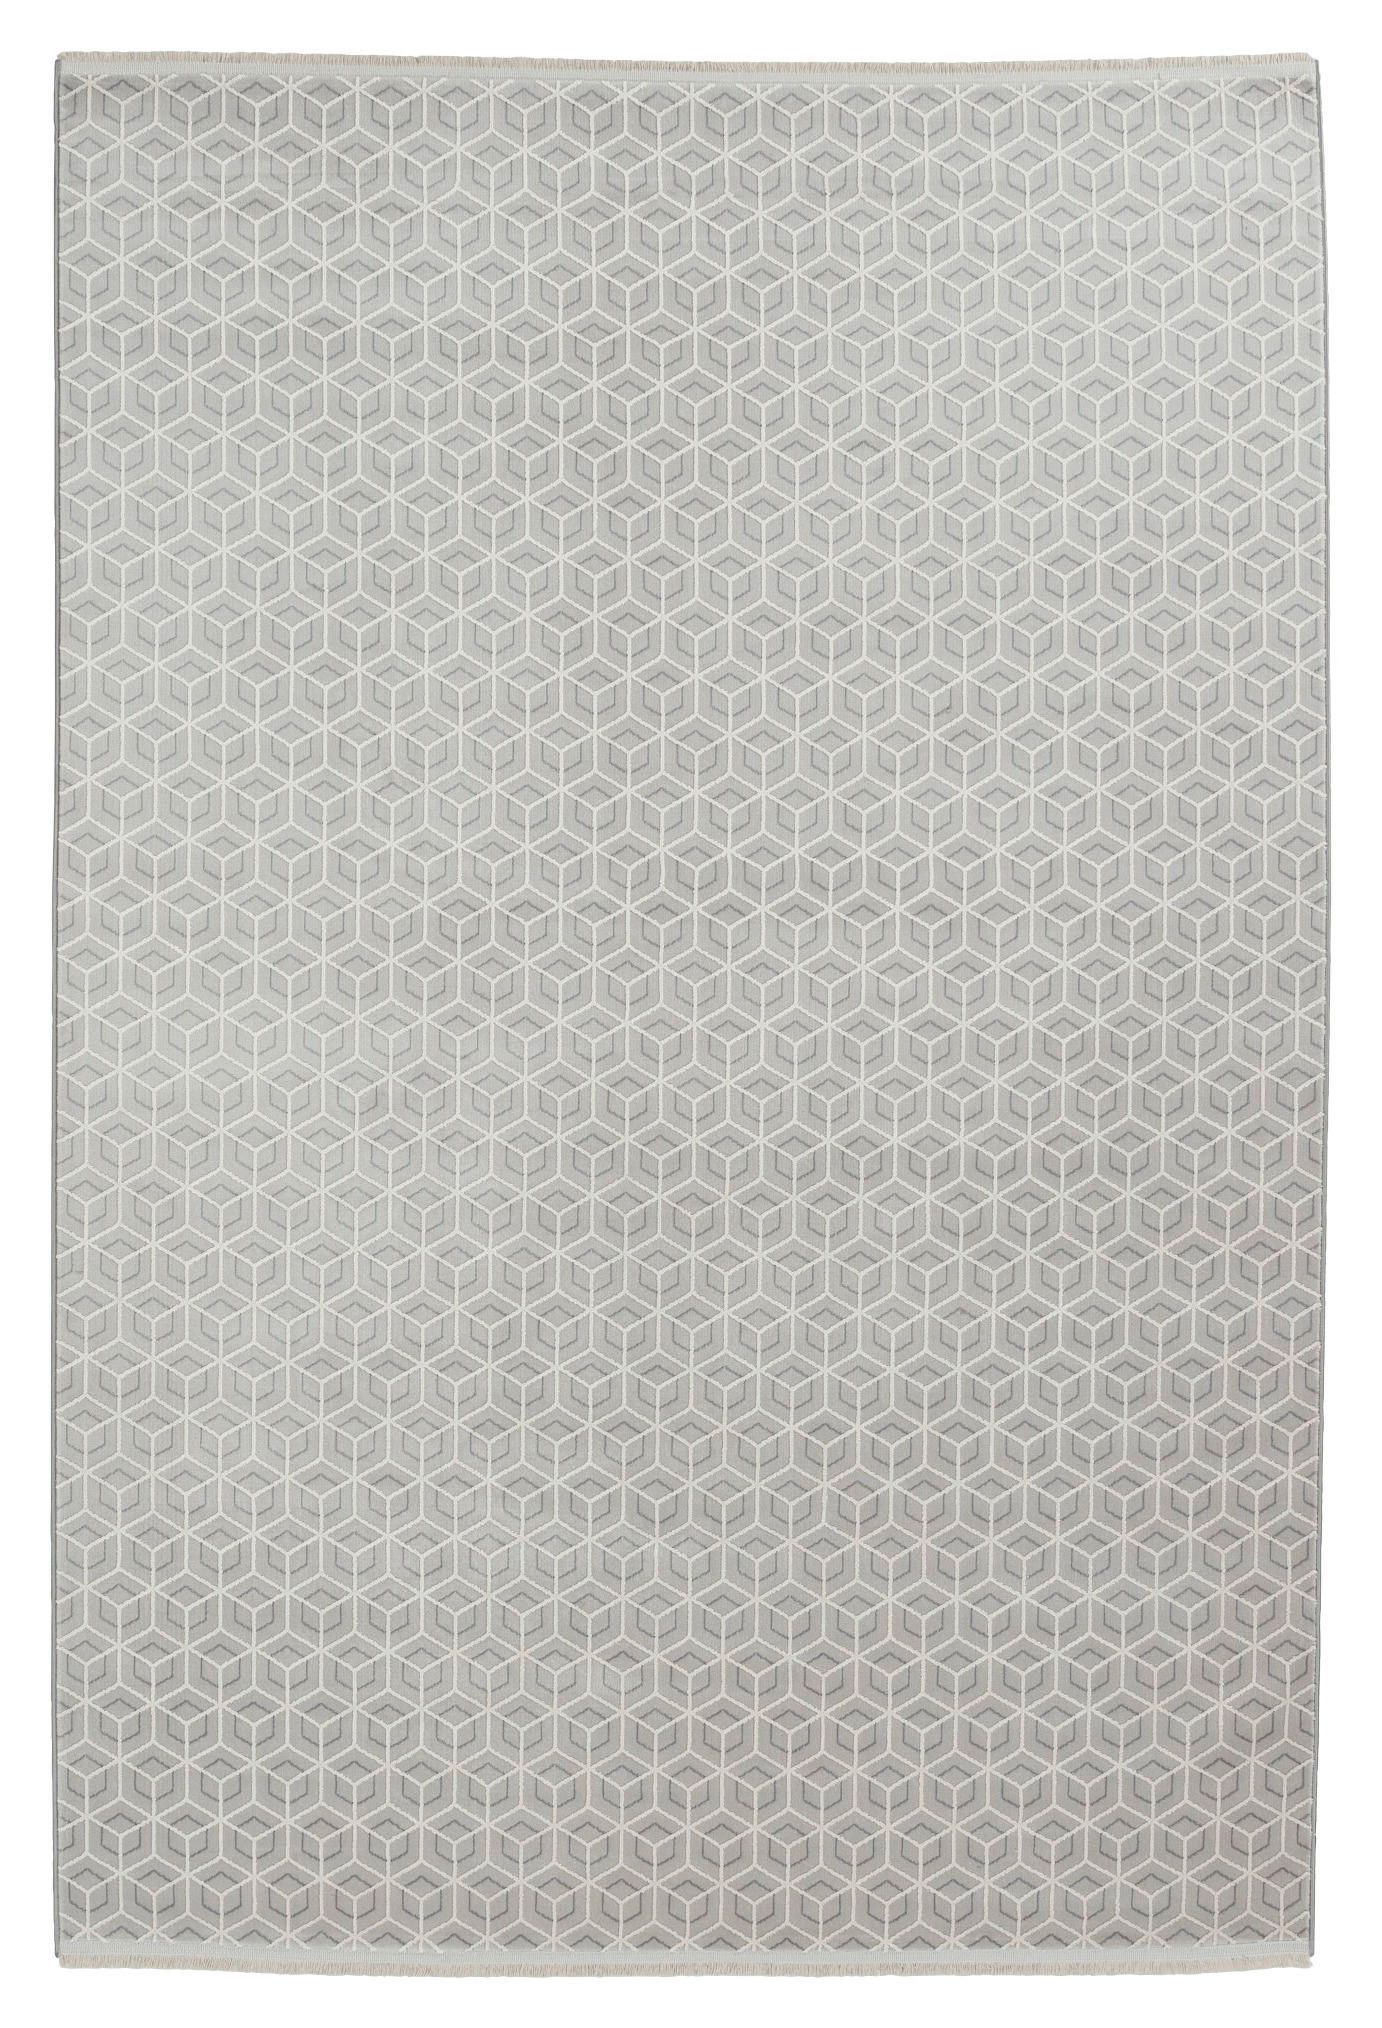 WEBTEPPICH 200/300 cm Metric  - Silberfarben, Design, Textil (200/300cm) - Joop!